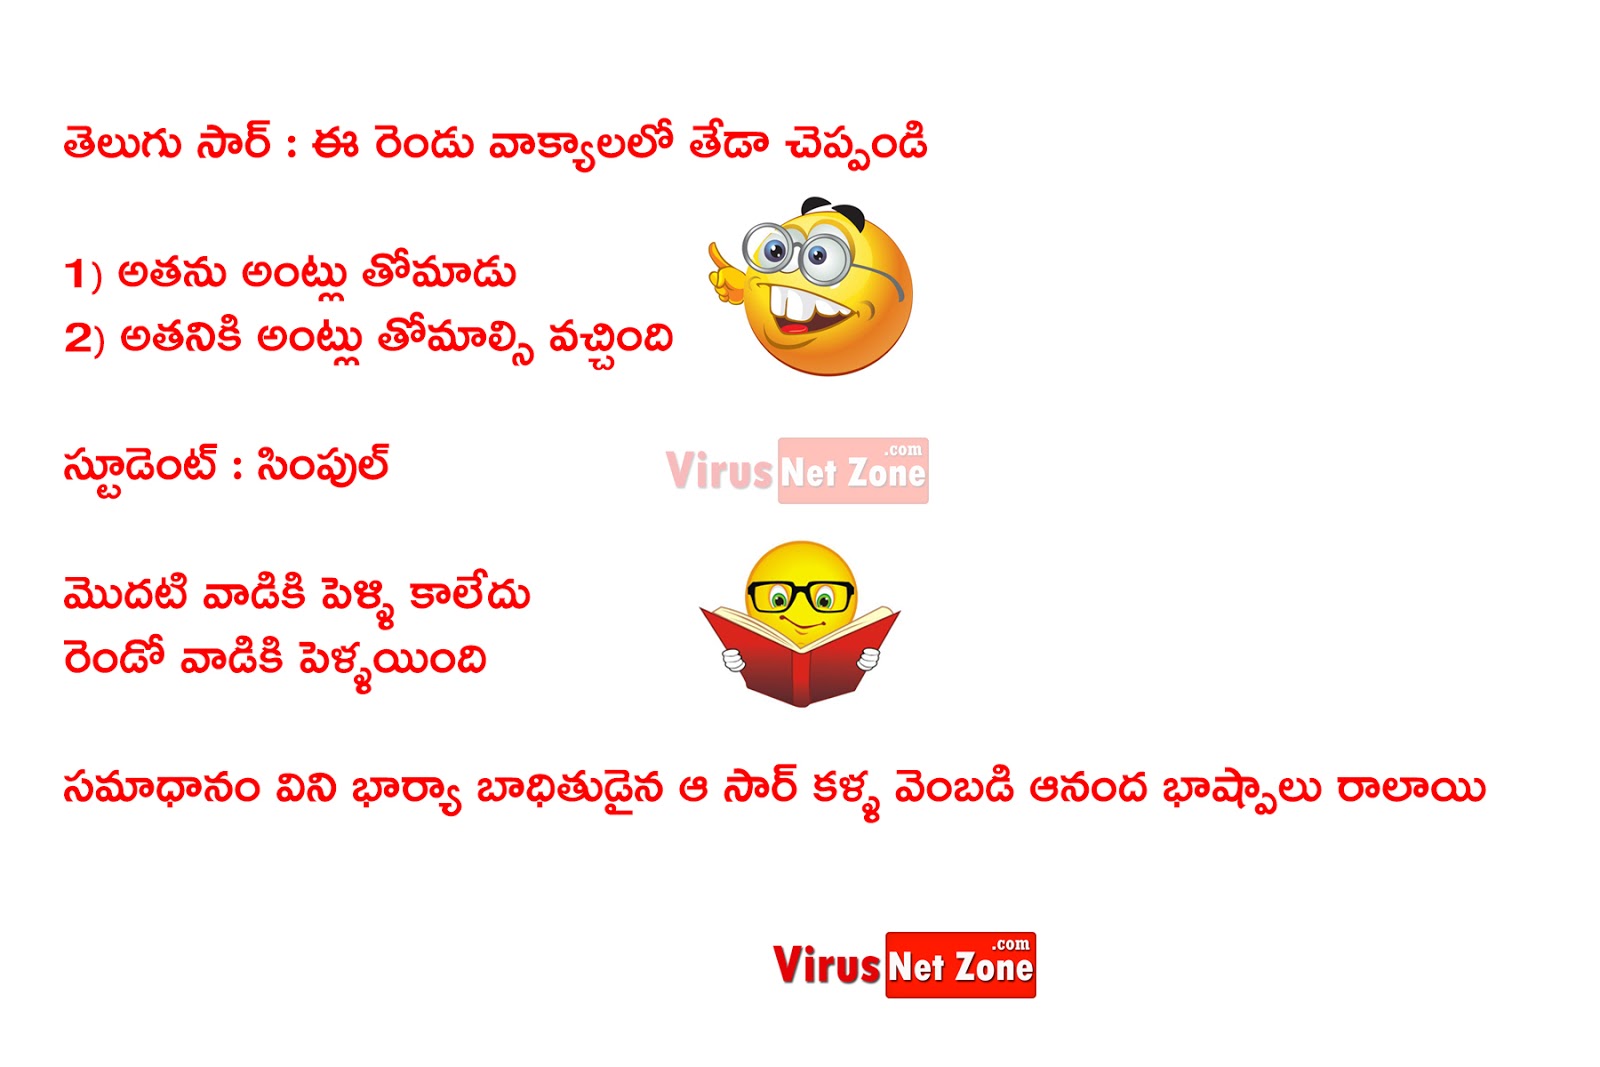 Student and Teacher Telugu Funny Jokes images - Virus Net Zone